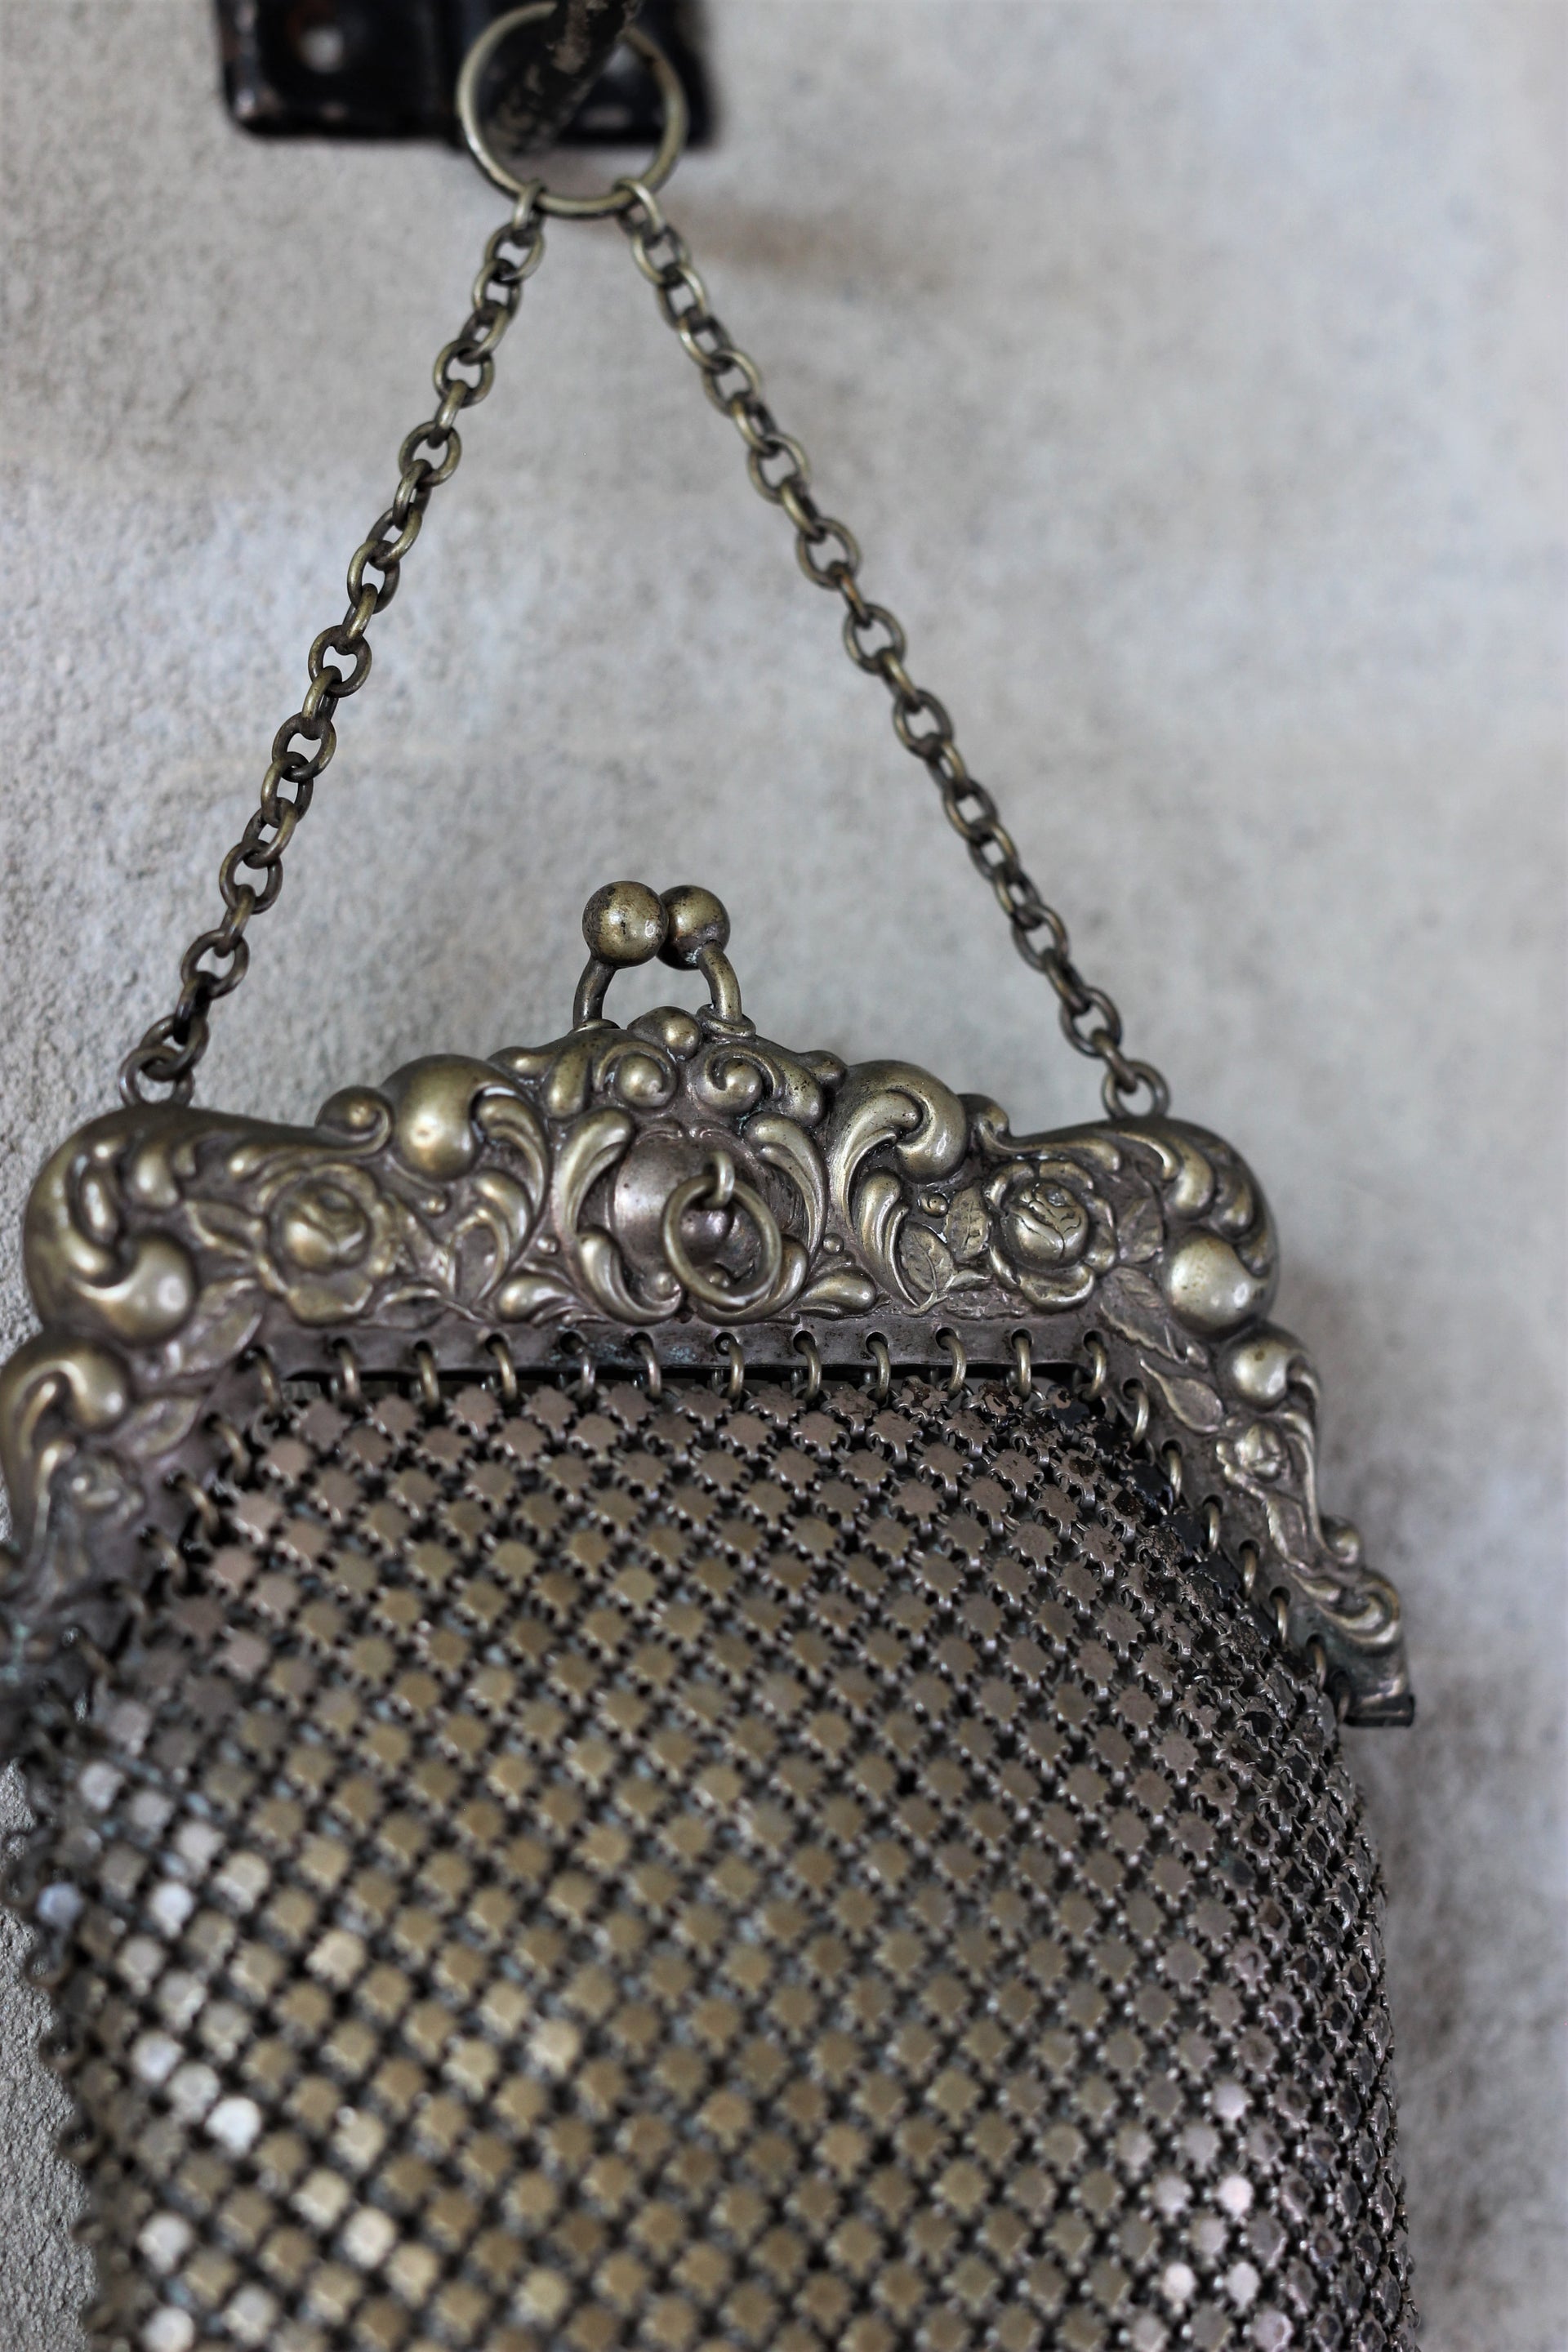 Antique 1900's German Silver Mesh Bag